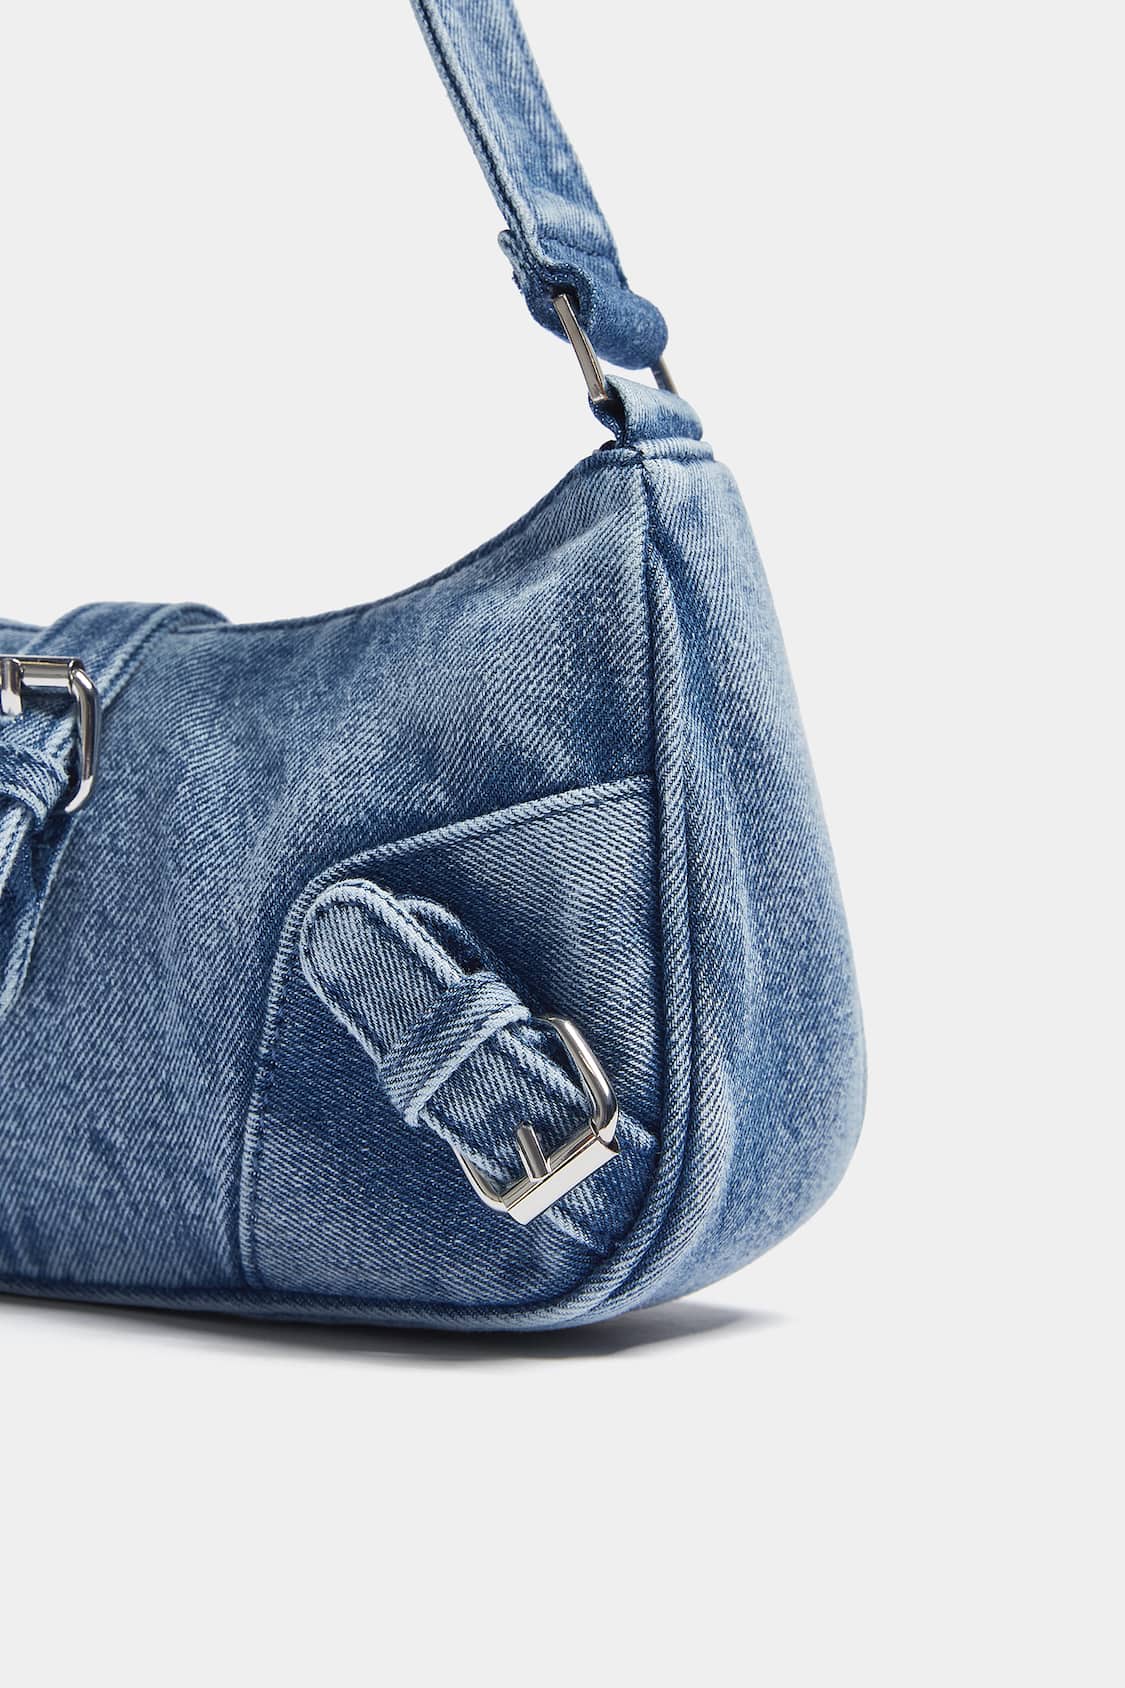 Pull&Bear Women's Jeans Denim Shoulder Bag